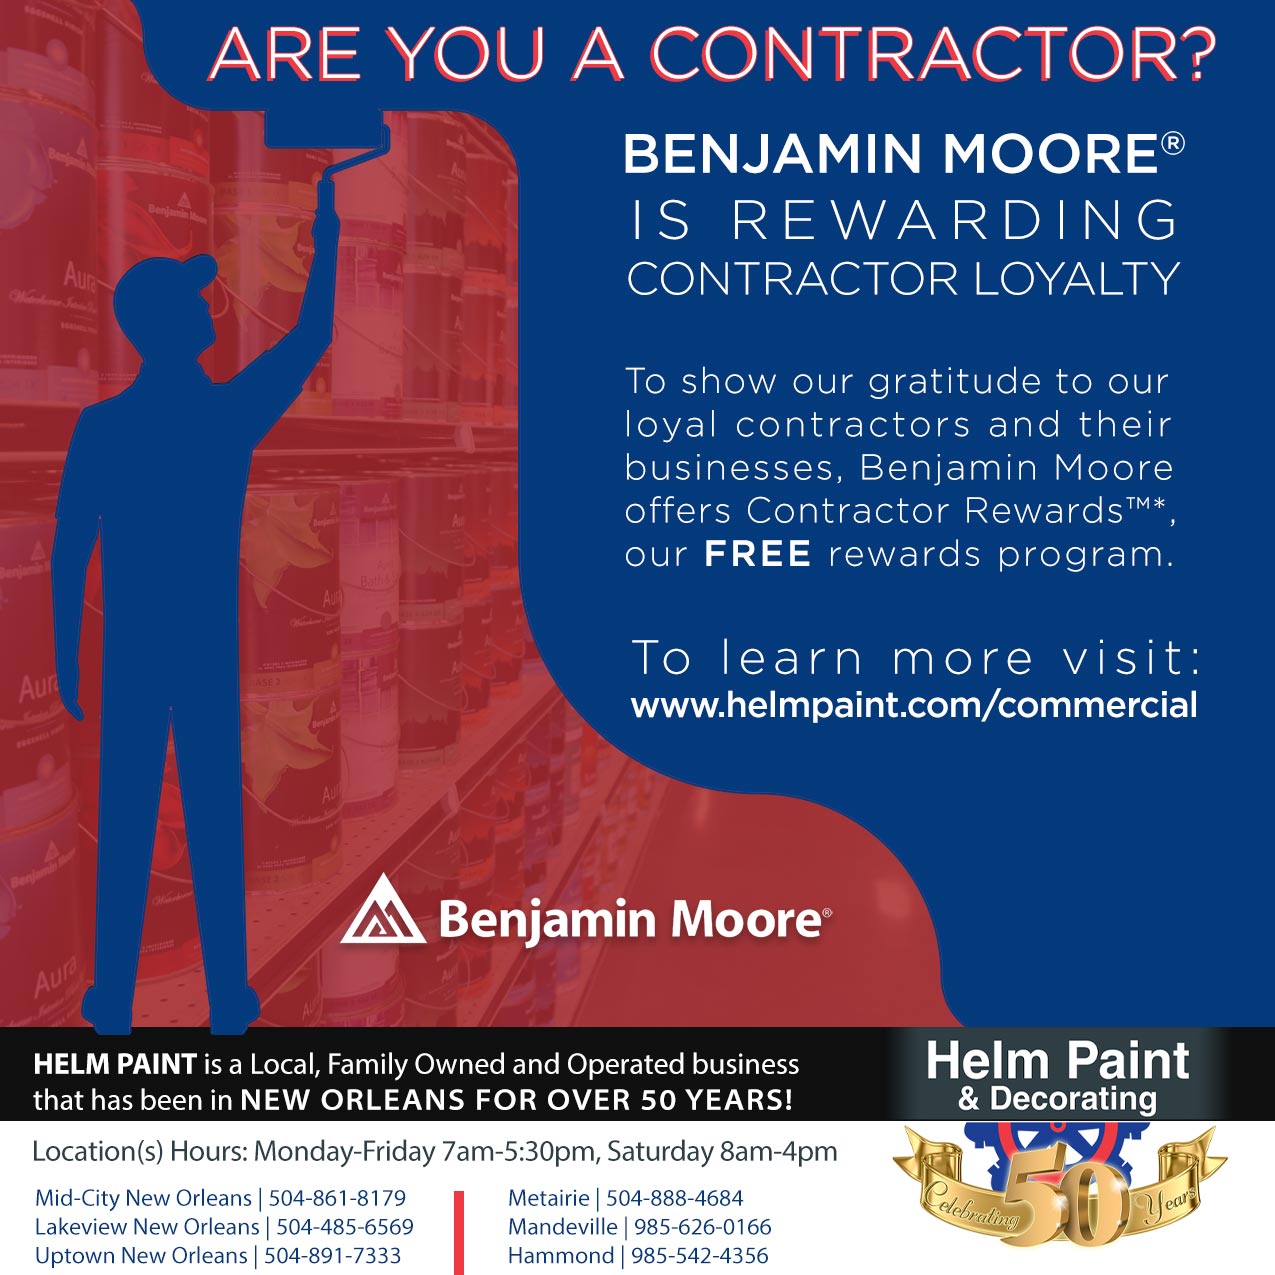 Helm Paint Contractor Rewards